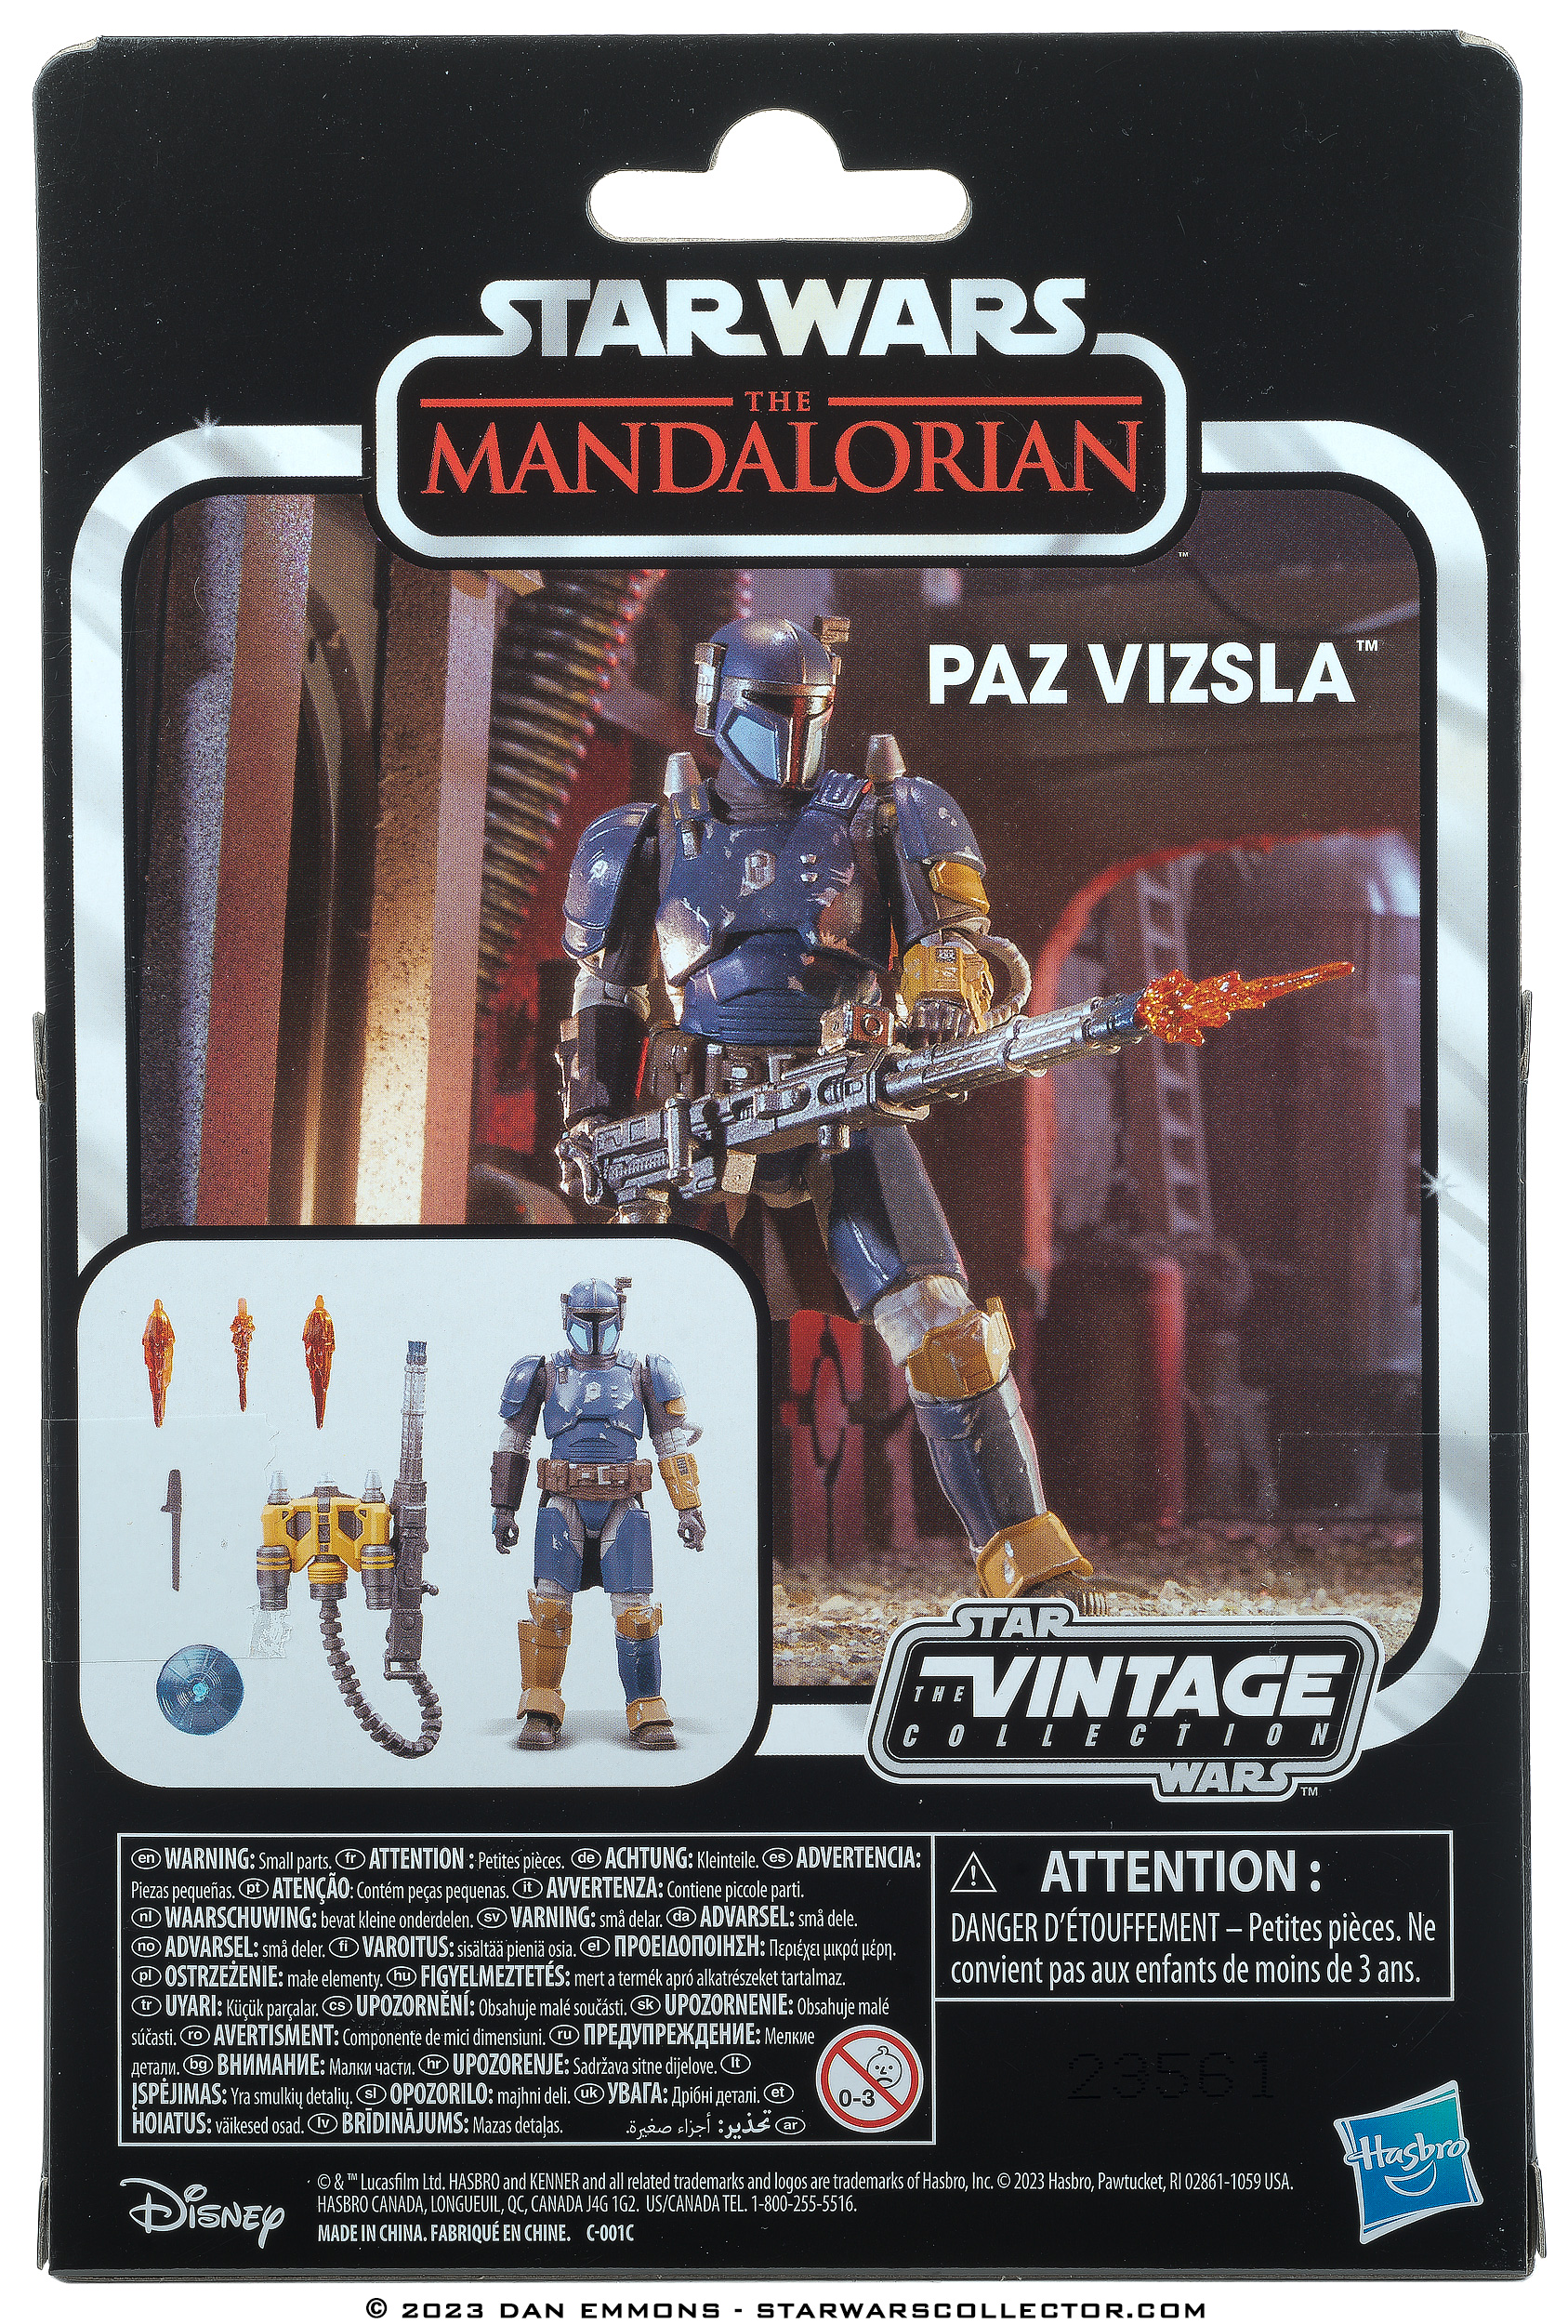 The Vintage Collection - Deluxe - Paz Vizsla